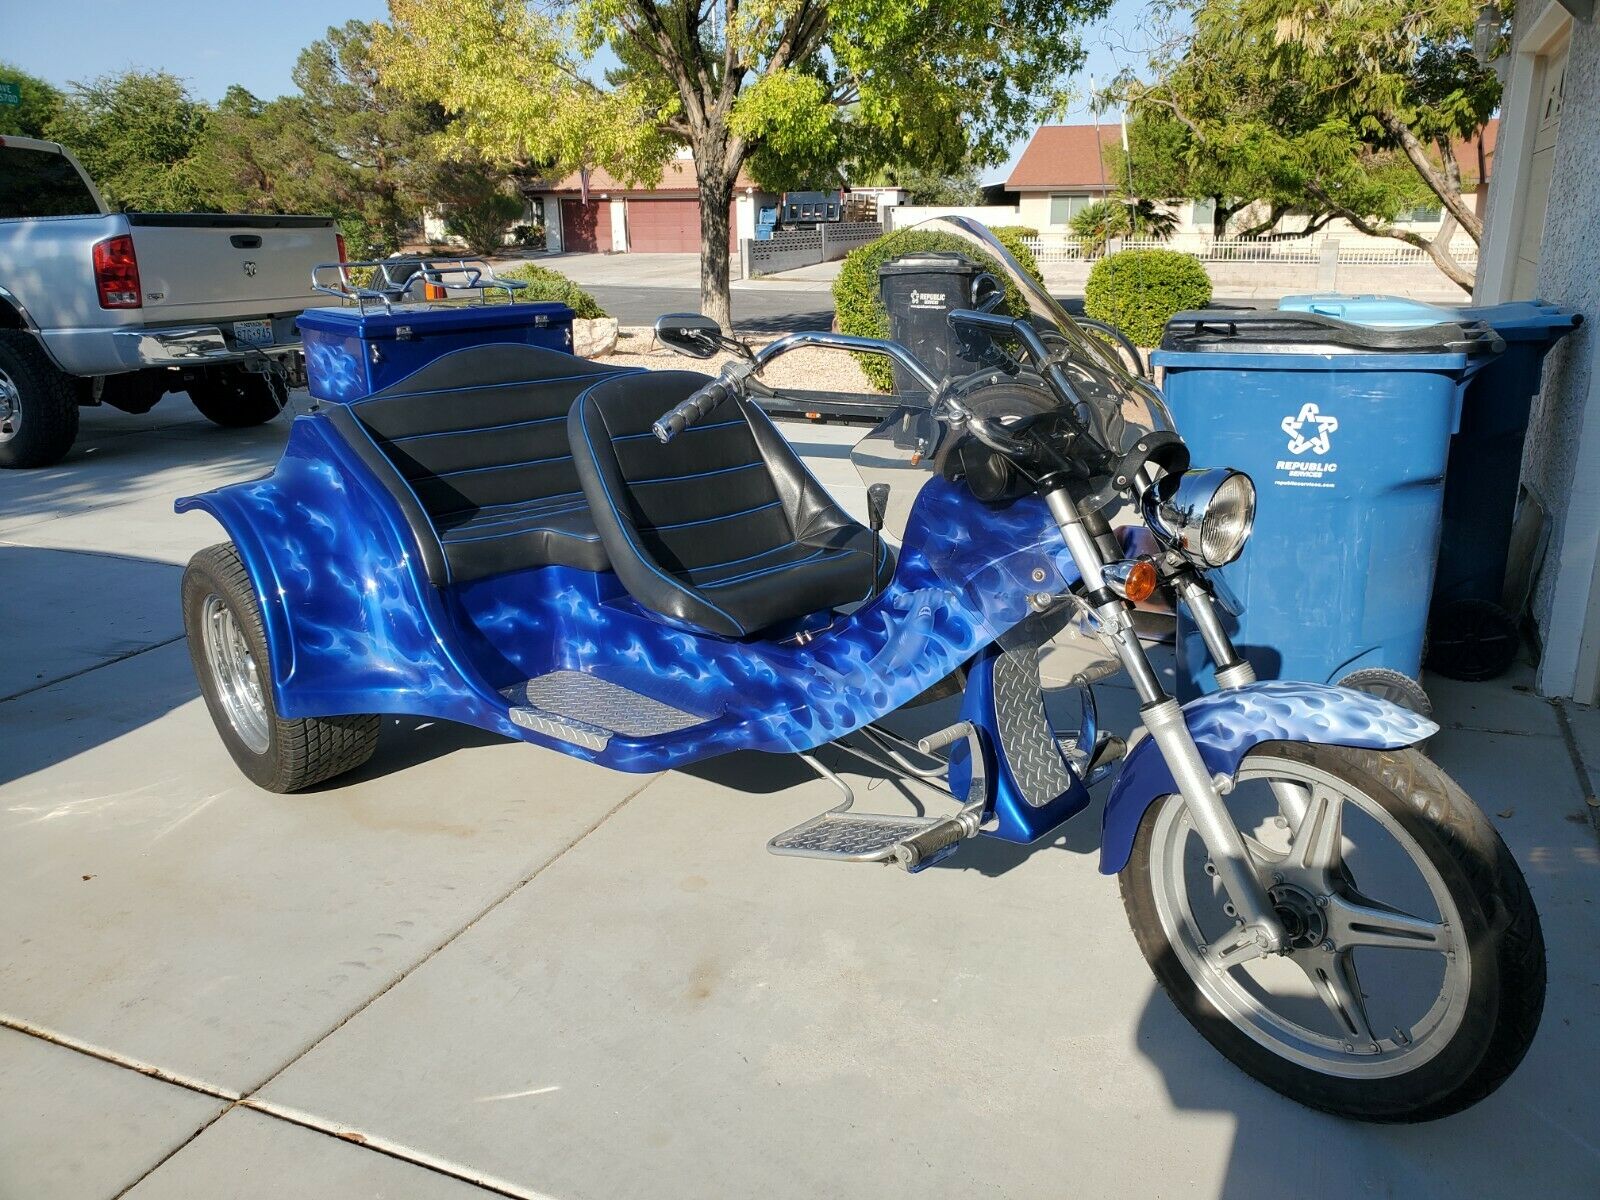 2002 Custom Built Motorcycles Trike  1776  Chrome Engine, $4k Paint Job 2 Person Trike 4 Speed  John Edwards Company